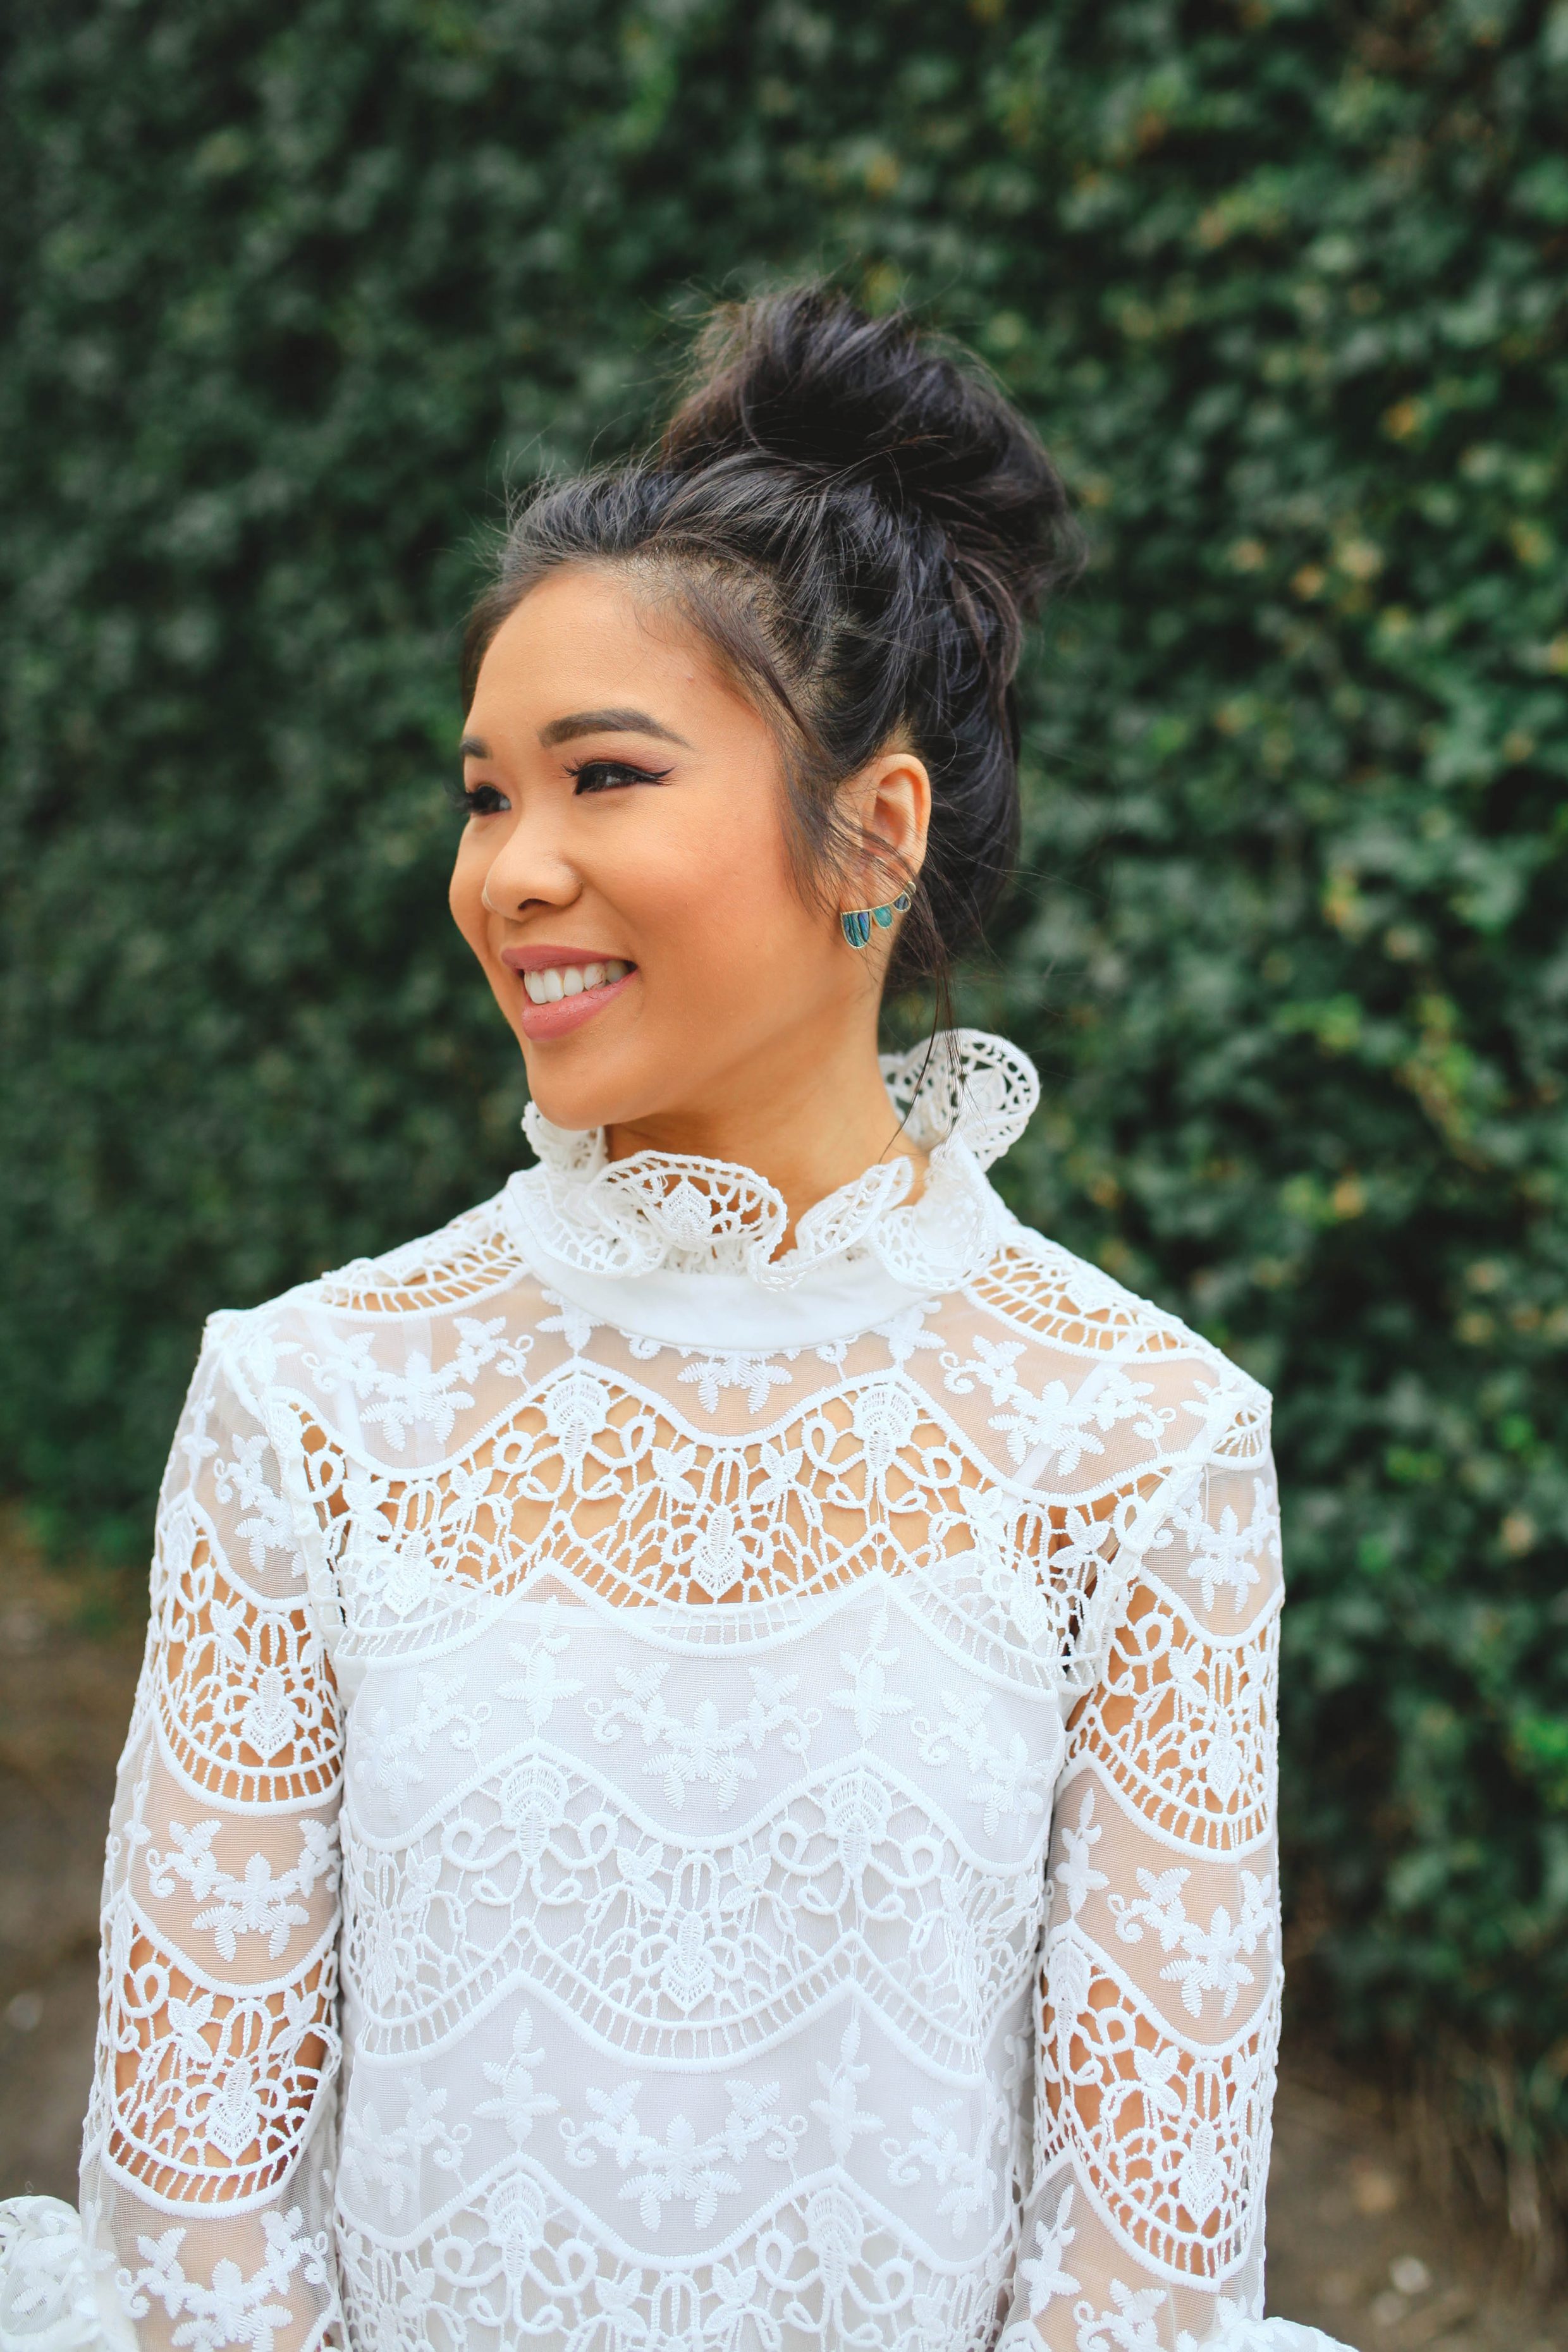 Hoang-Kim Cung wears a lace crochet top with Kendra Scott ear climbers